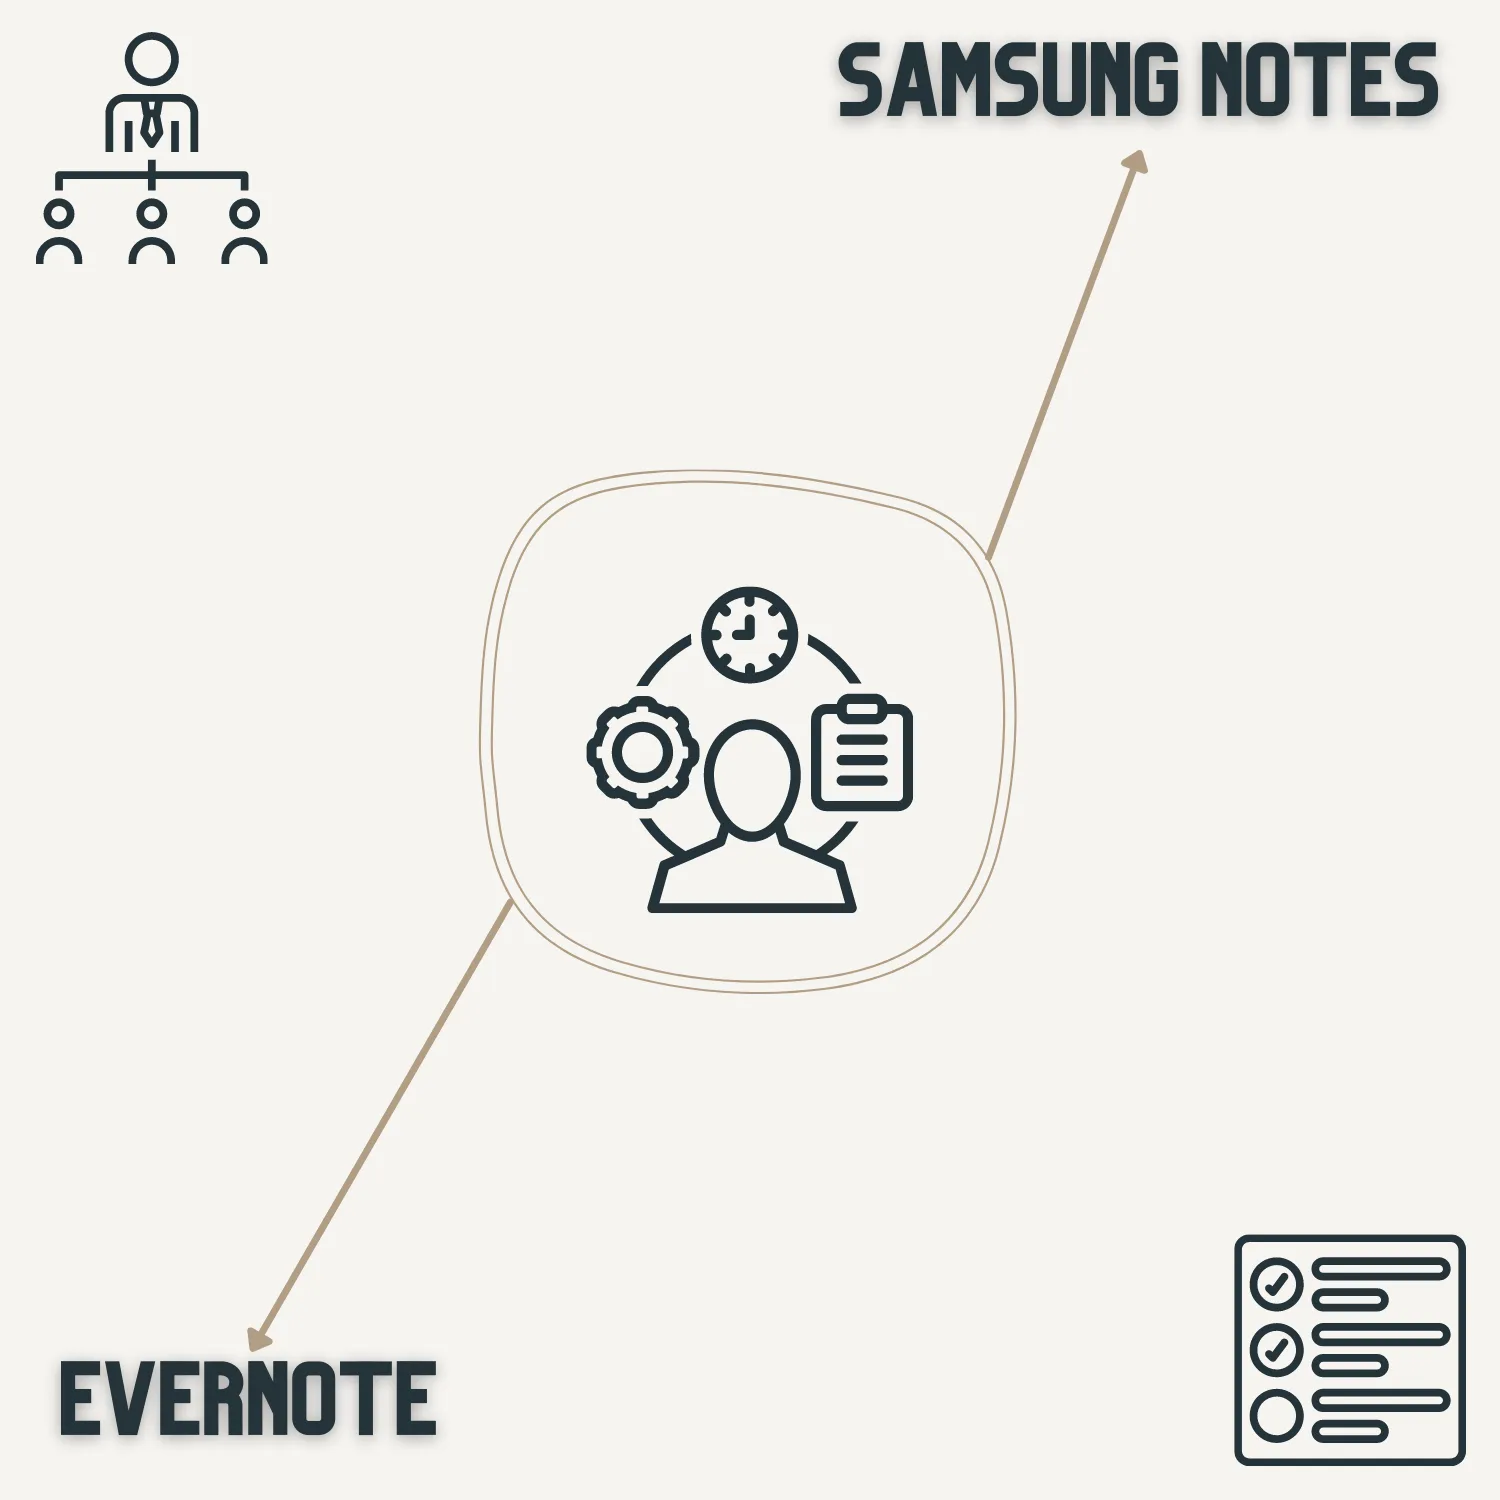 Samsung Notes vs Evernote